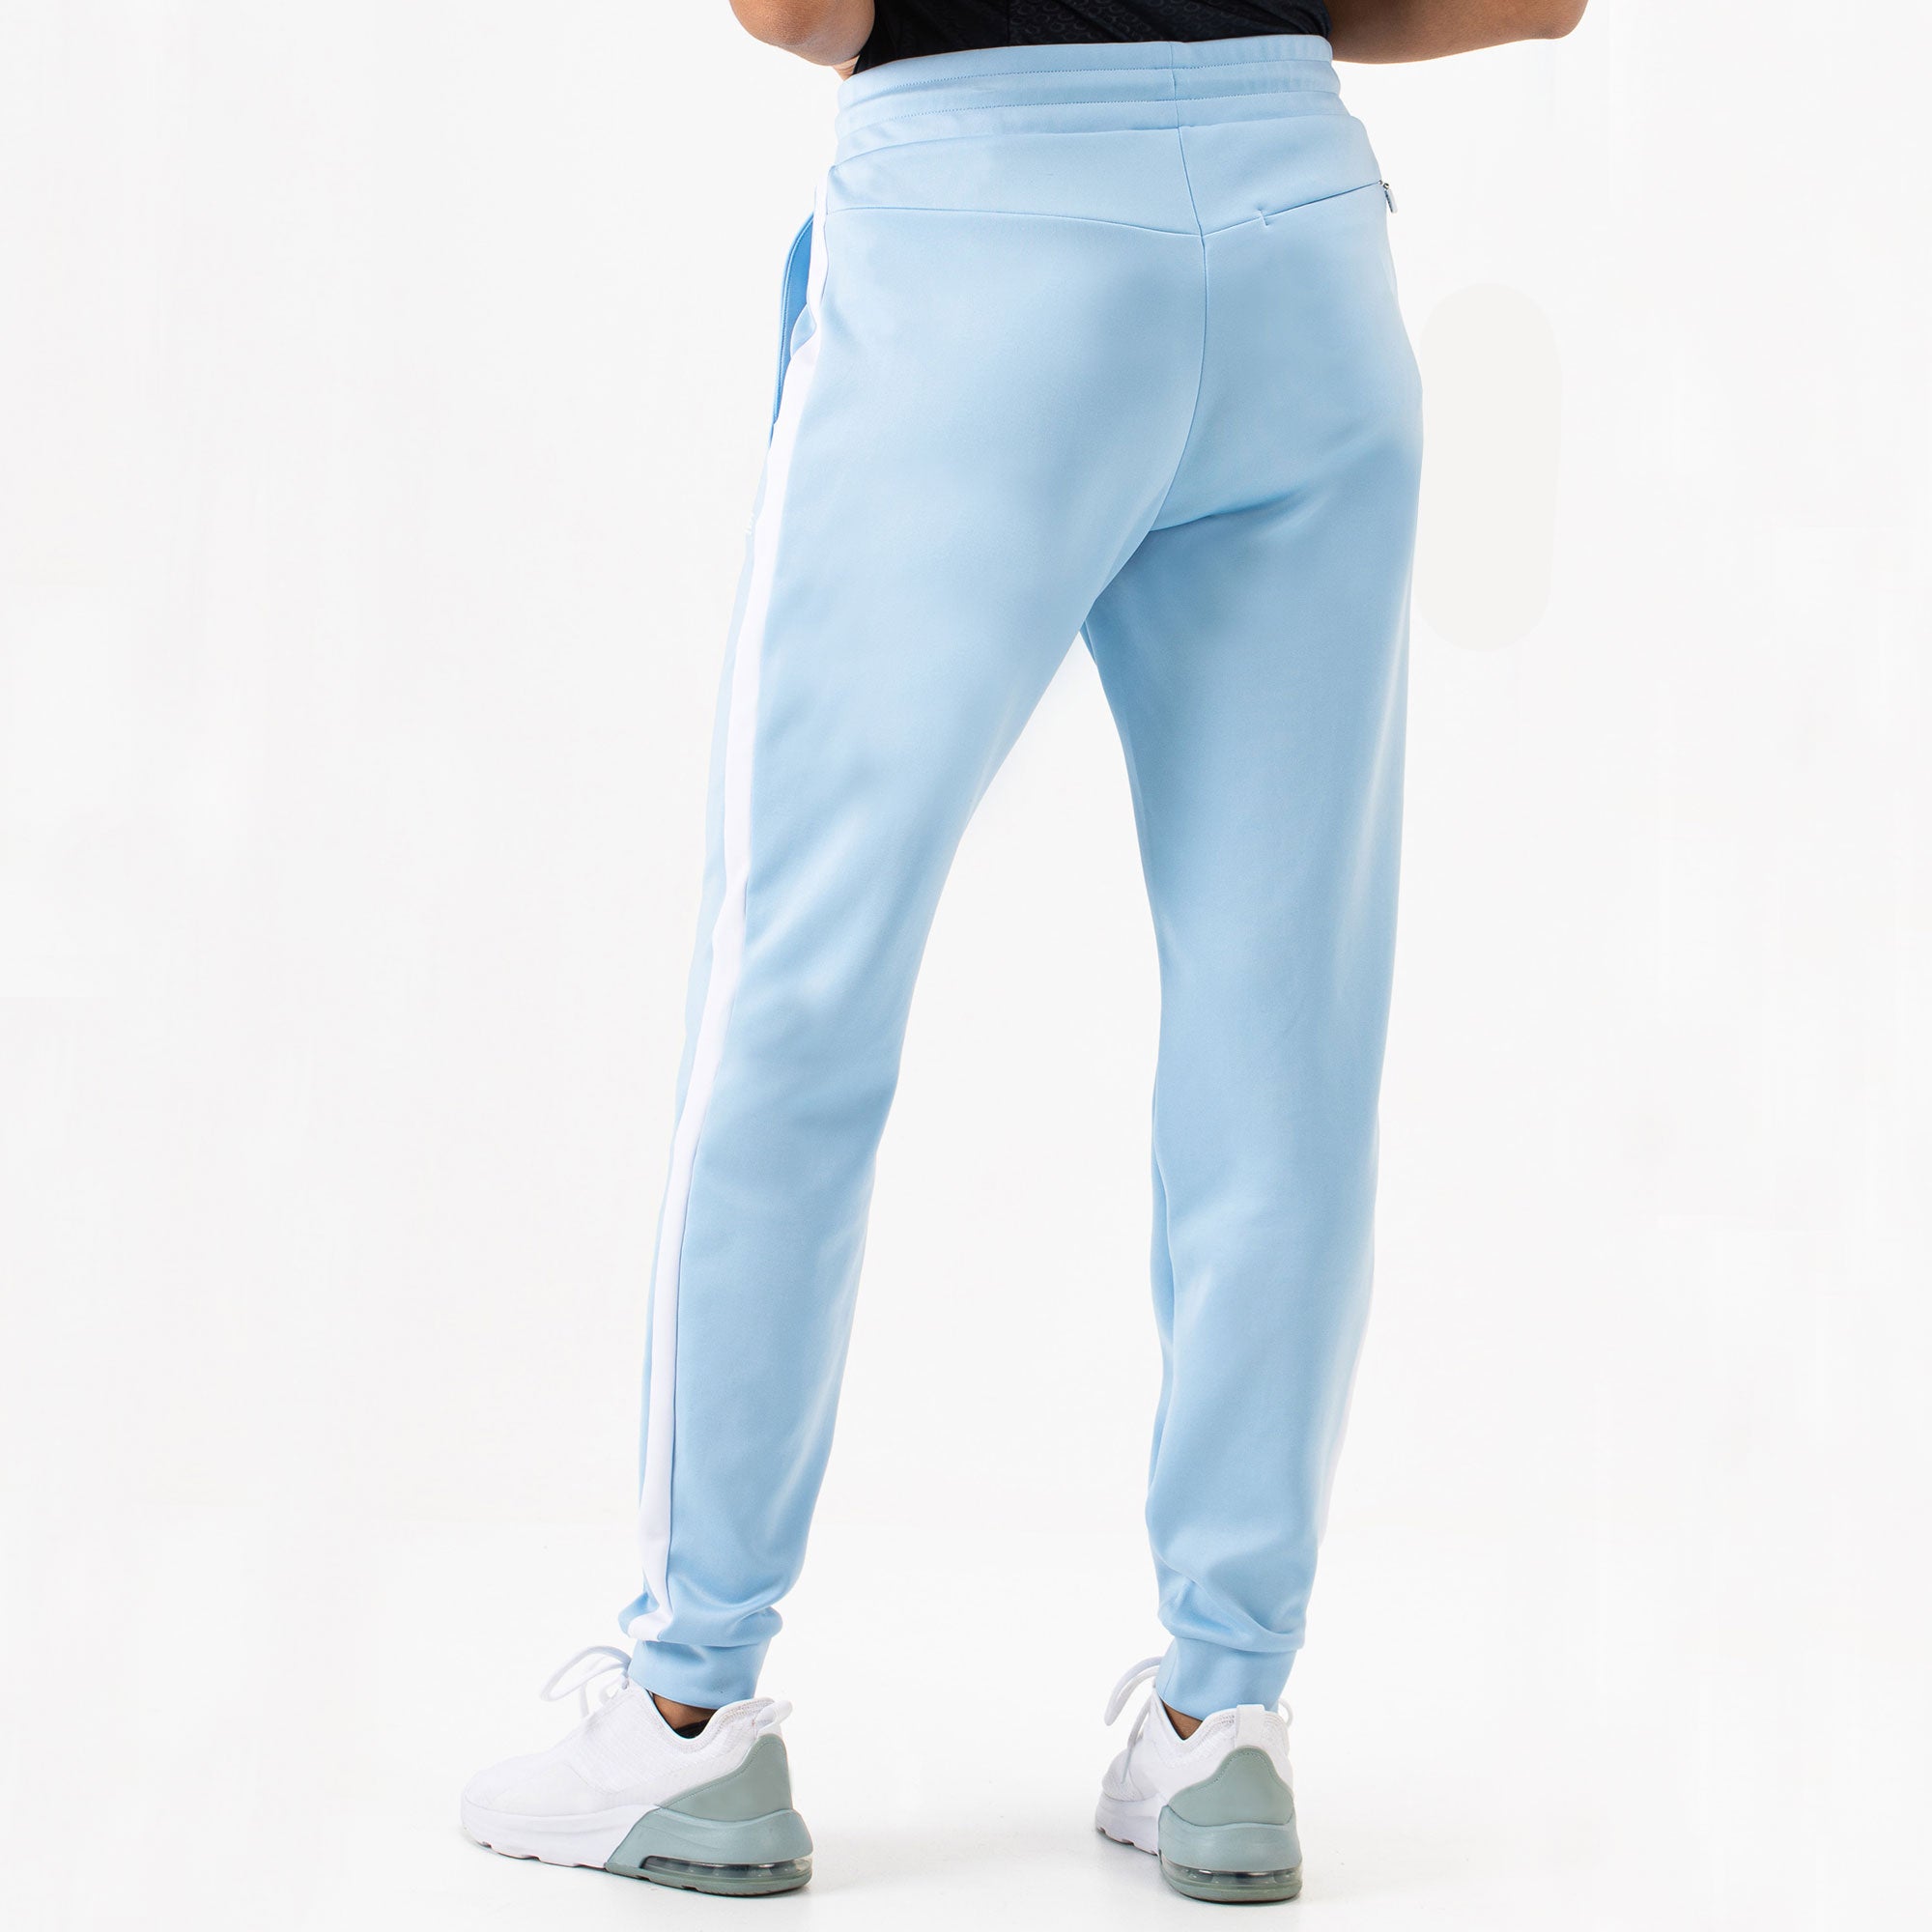 Sjeng Sports Kensi Women's Tennis Pants - Blue (2)